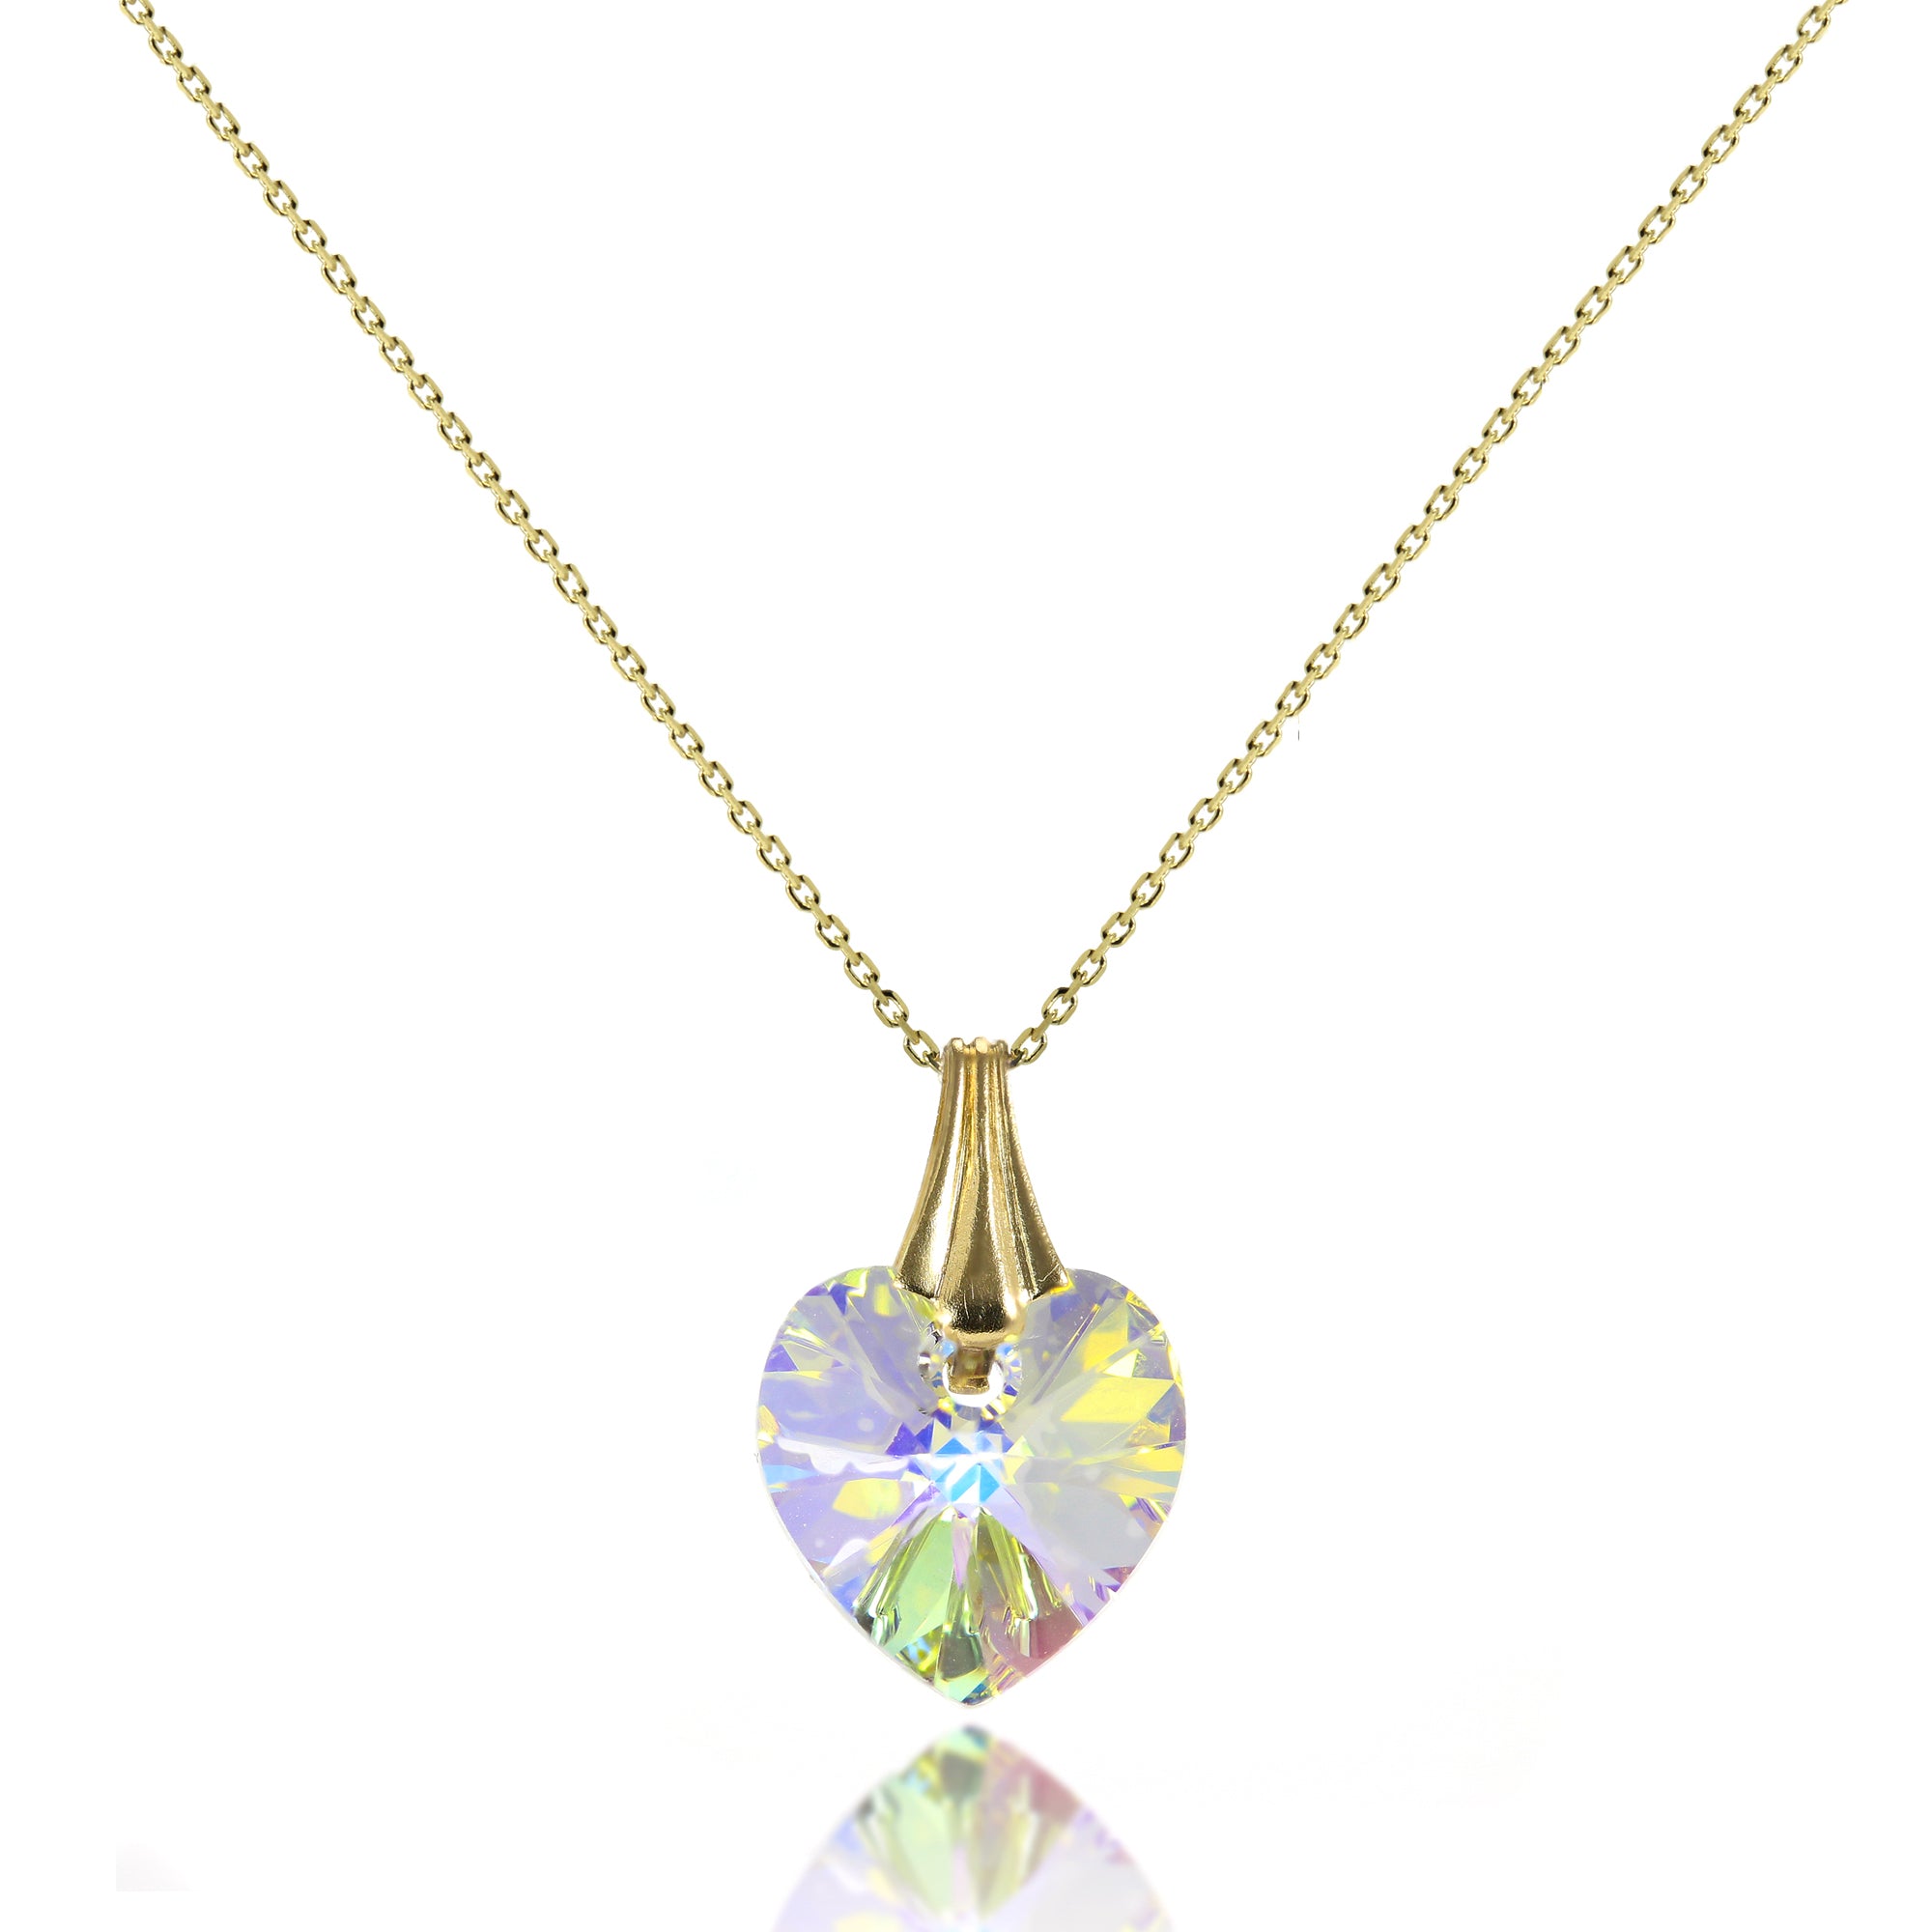 9ct Gold & Aurora Borealis CZ Crystal Heart Pendant / Necklace